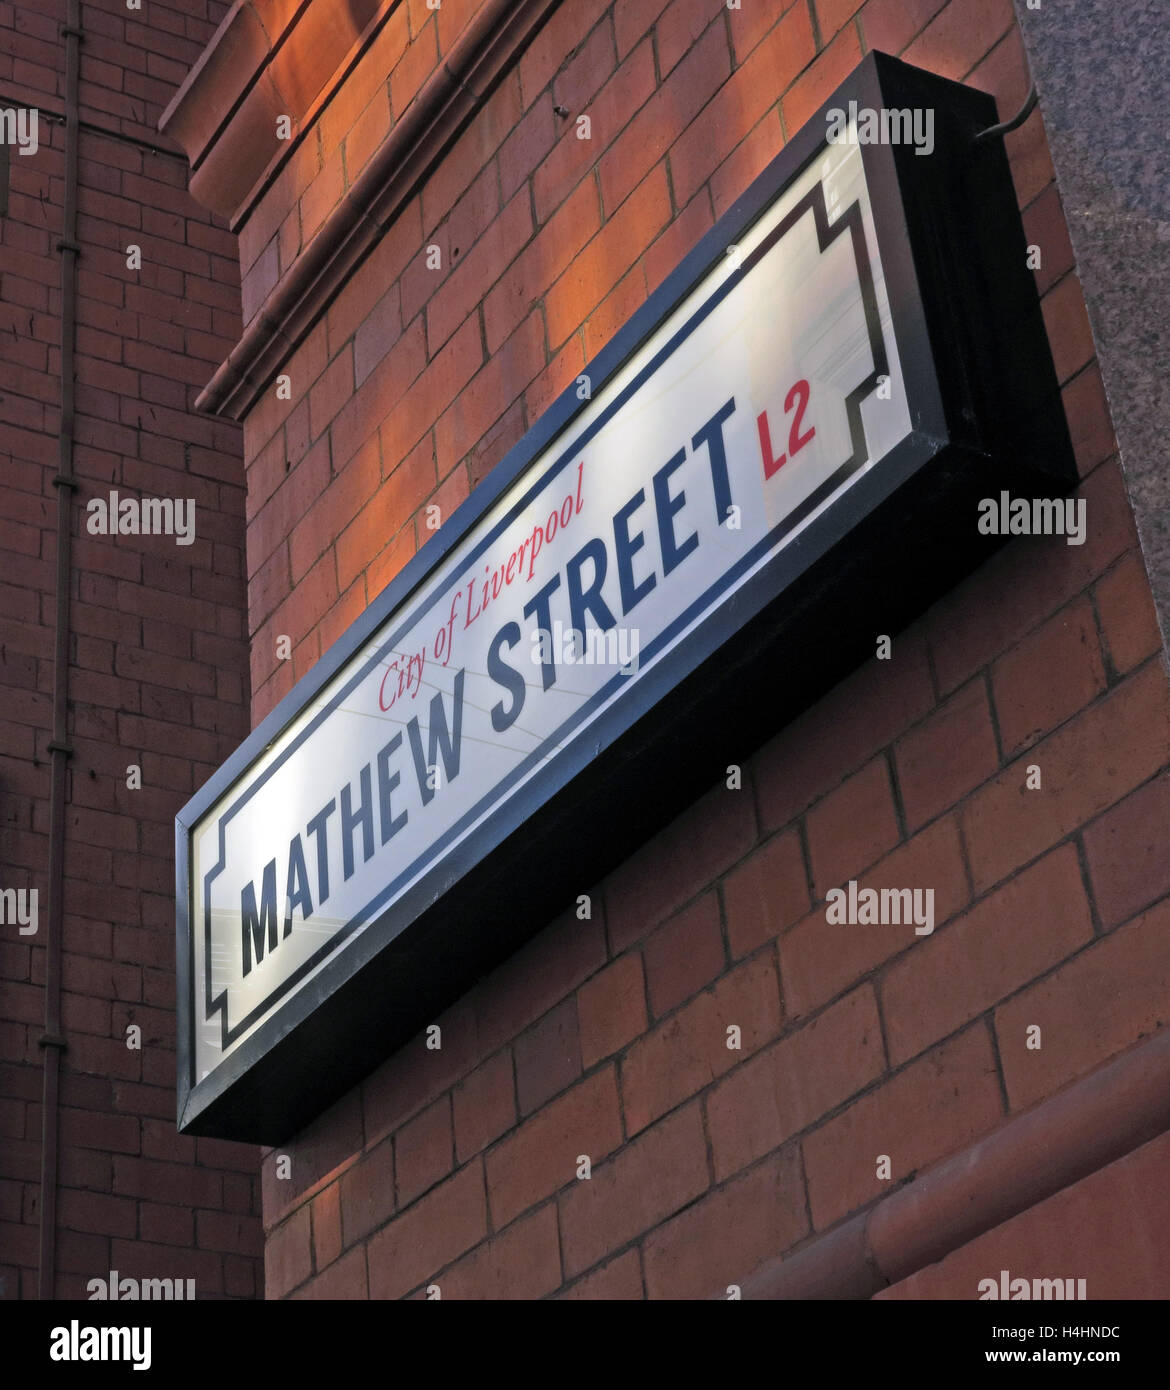 Mathew Street,Beatles Cavern walks,Liverpool,Merseyside,England Stock Photo